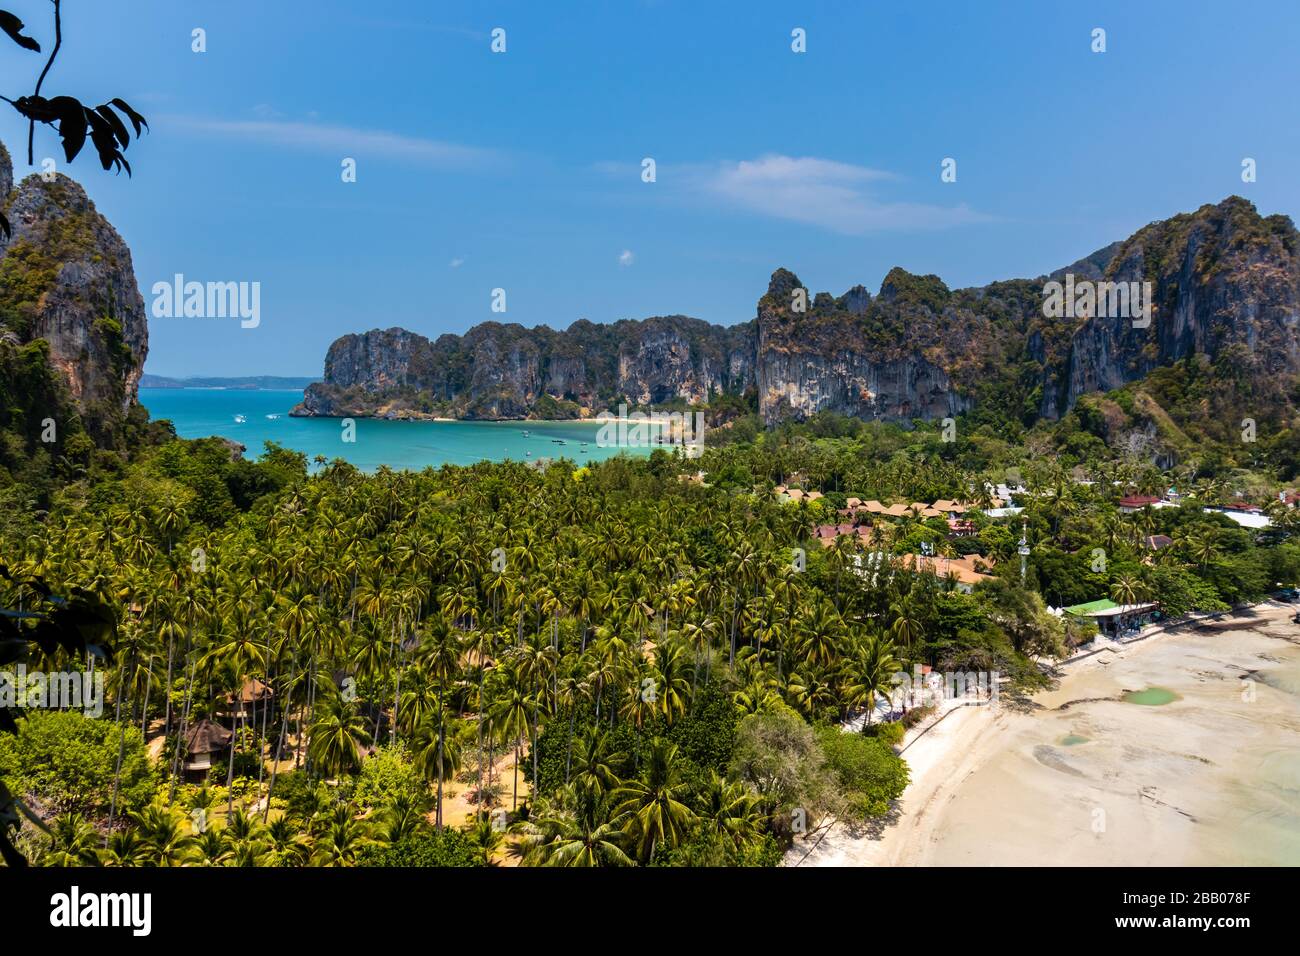 A beautiful tropical view of beaches, lush foliage and towering cliffs (Railay Beach, Thailand) Stock Photo